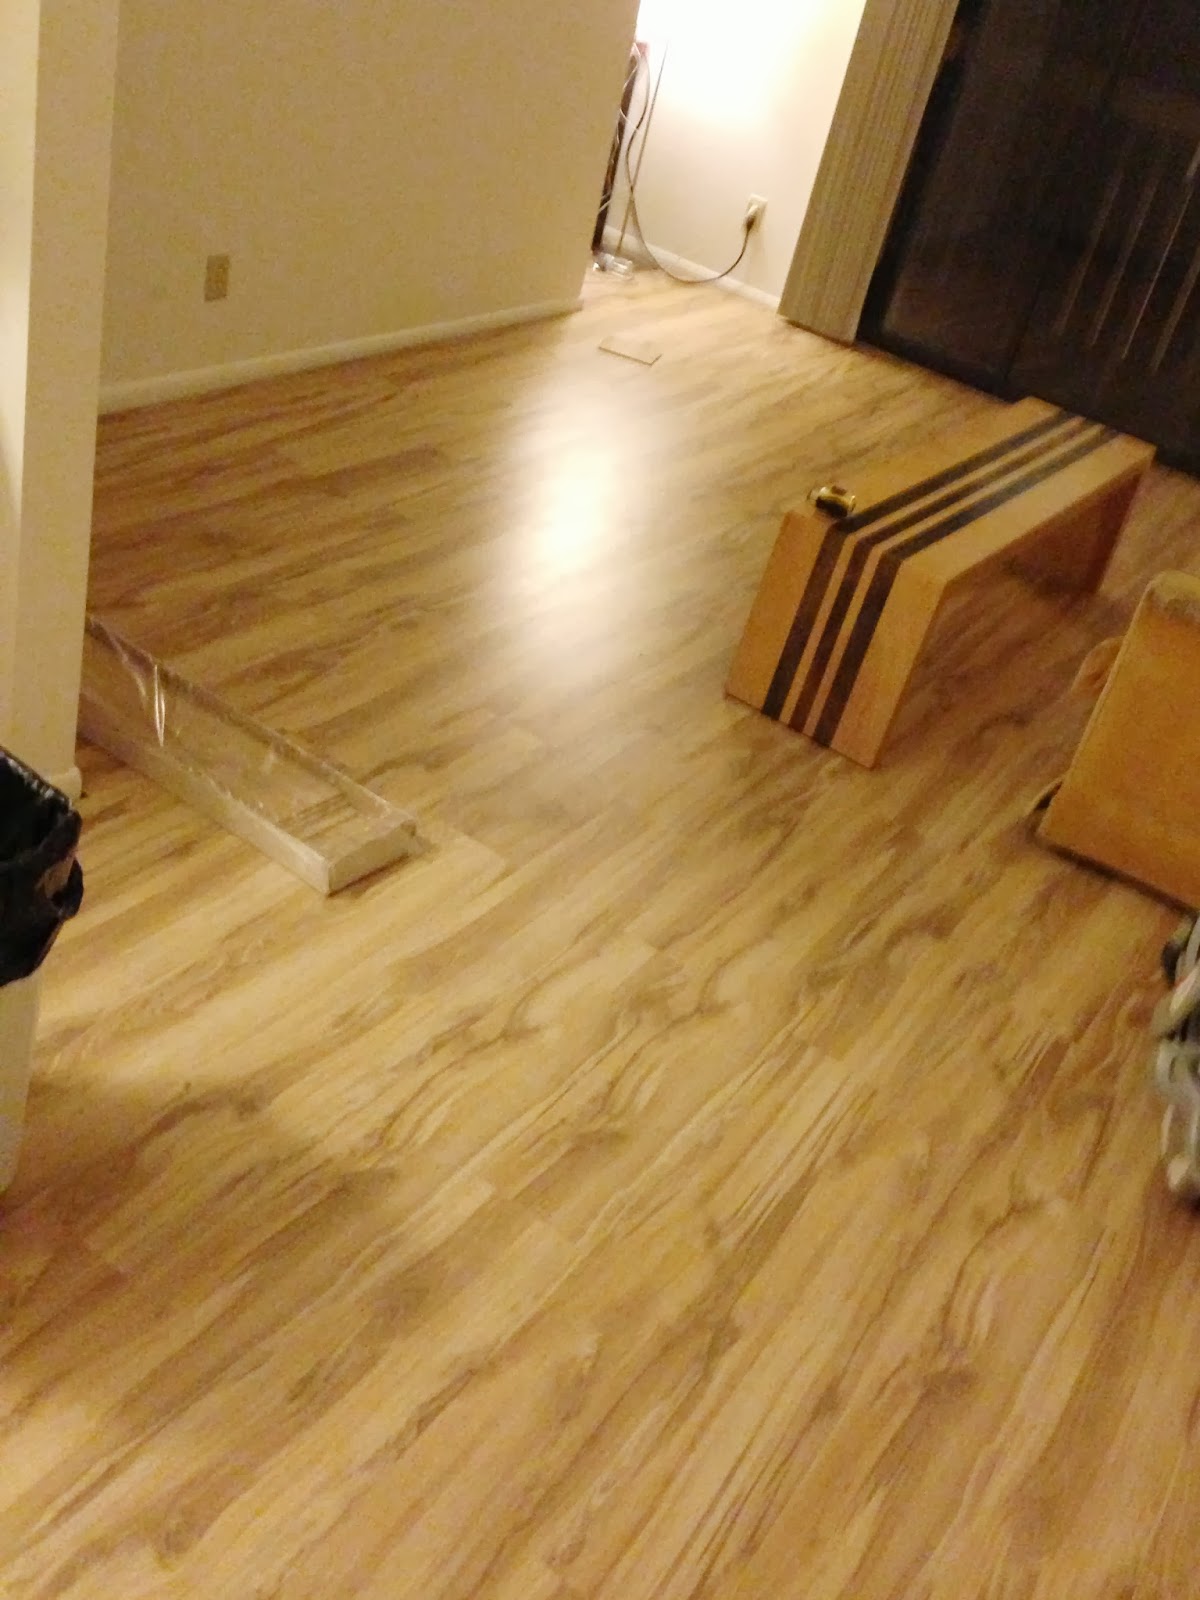 How We Put Hardwood Over Carpet - Messymom